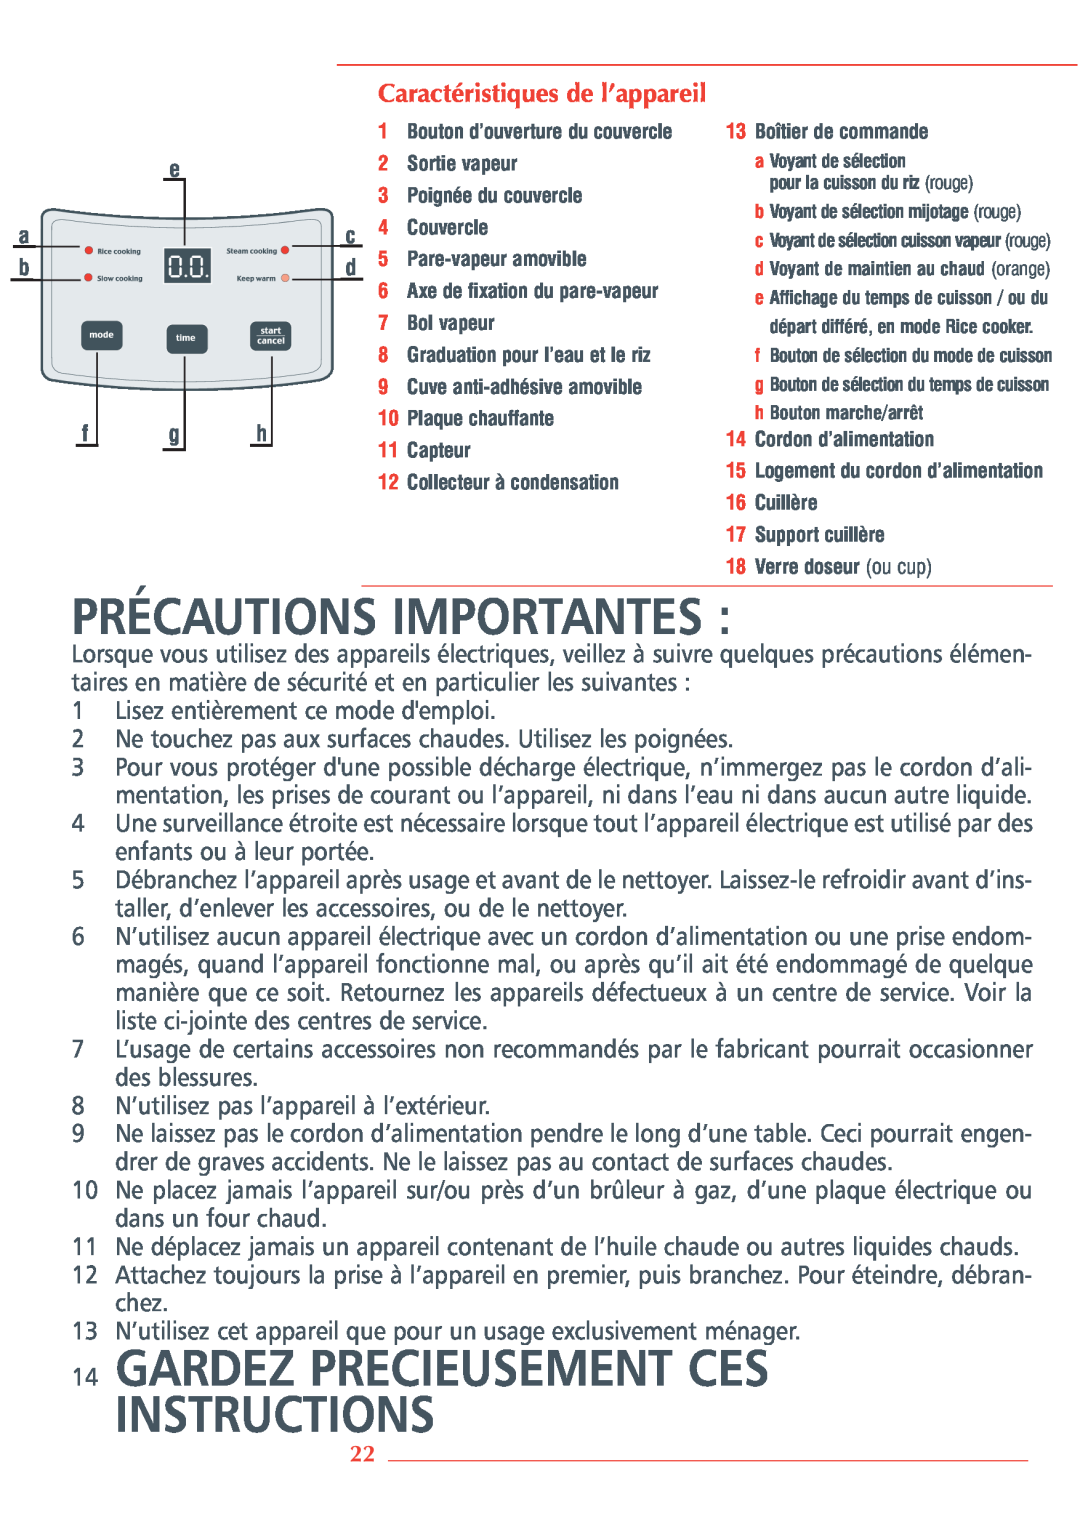 Krups 3.21 manual Précautions Importantes, Gardez Precieusement Ces Instructions 